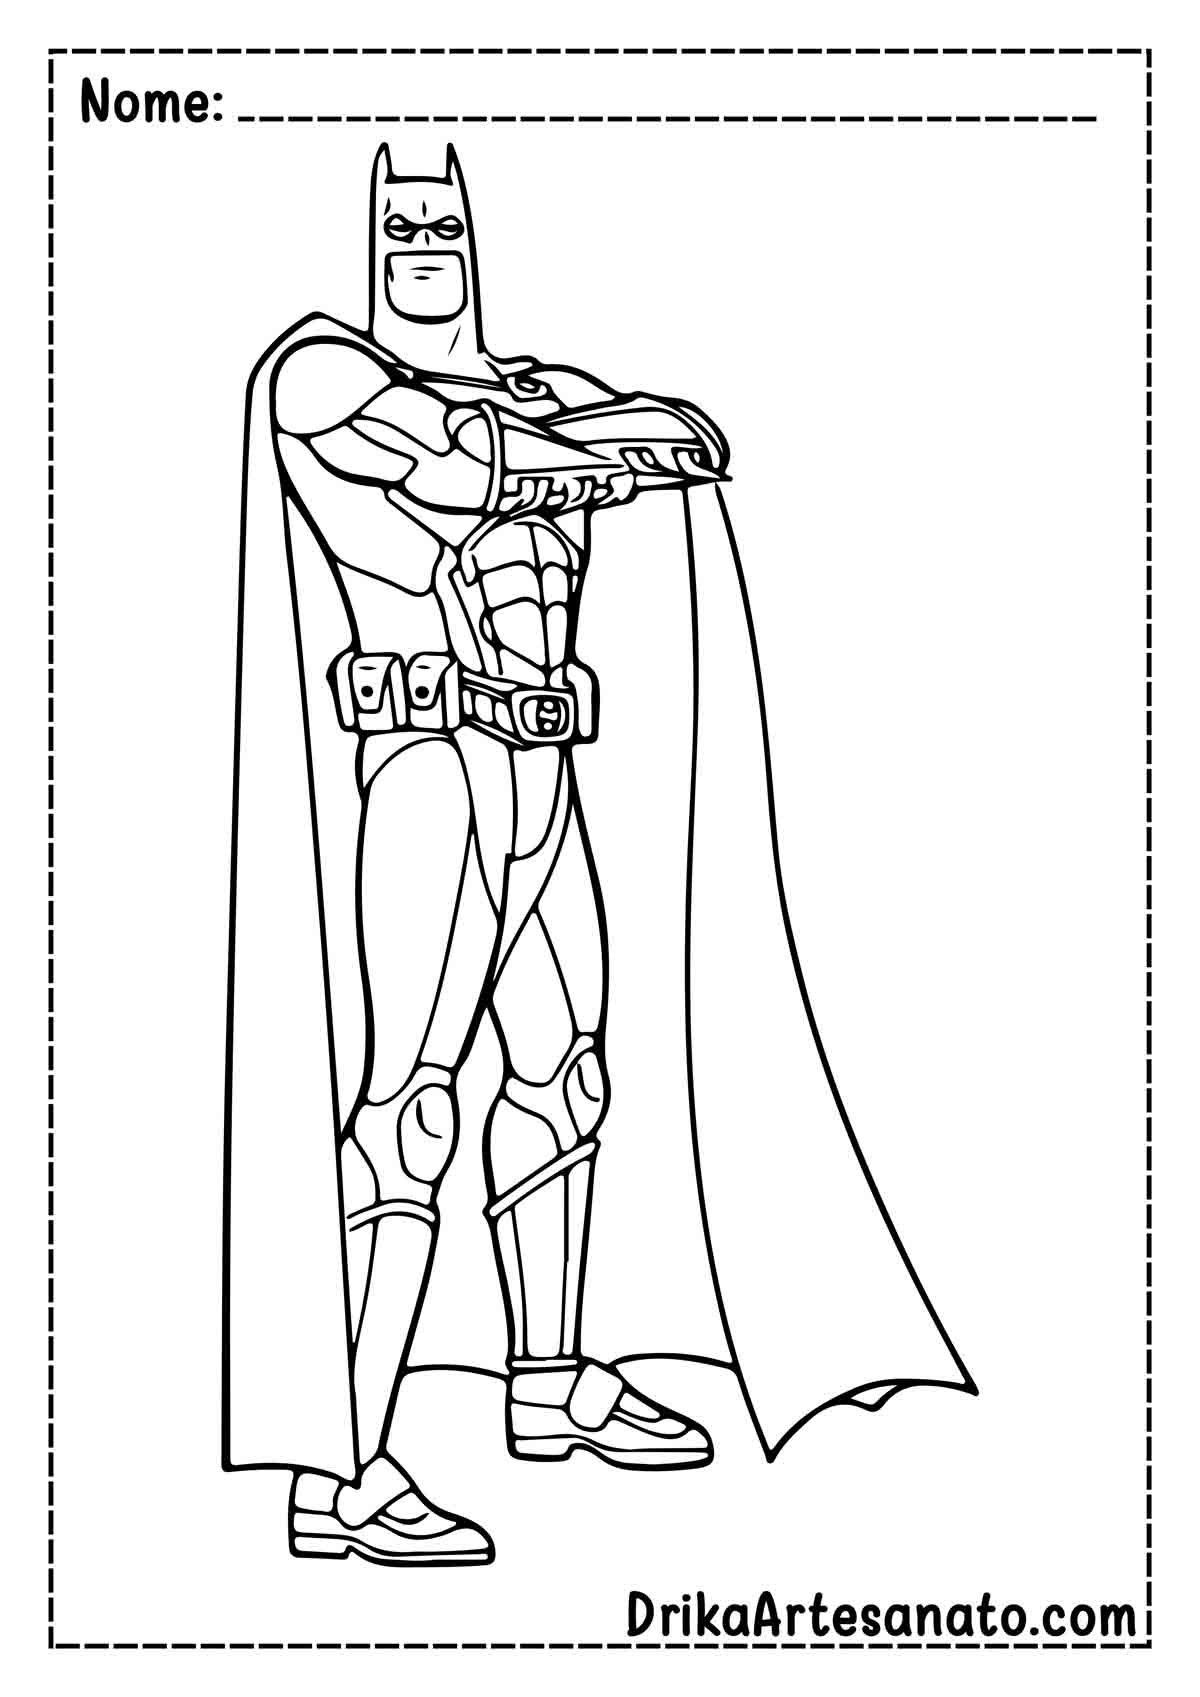 Desenho do Batman Infantil para Colorir